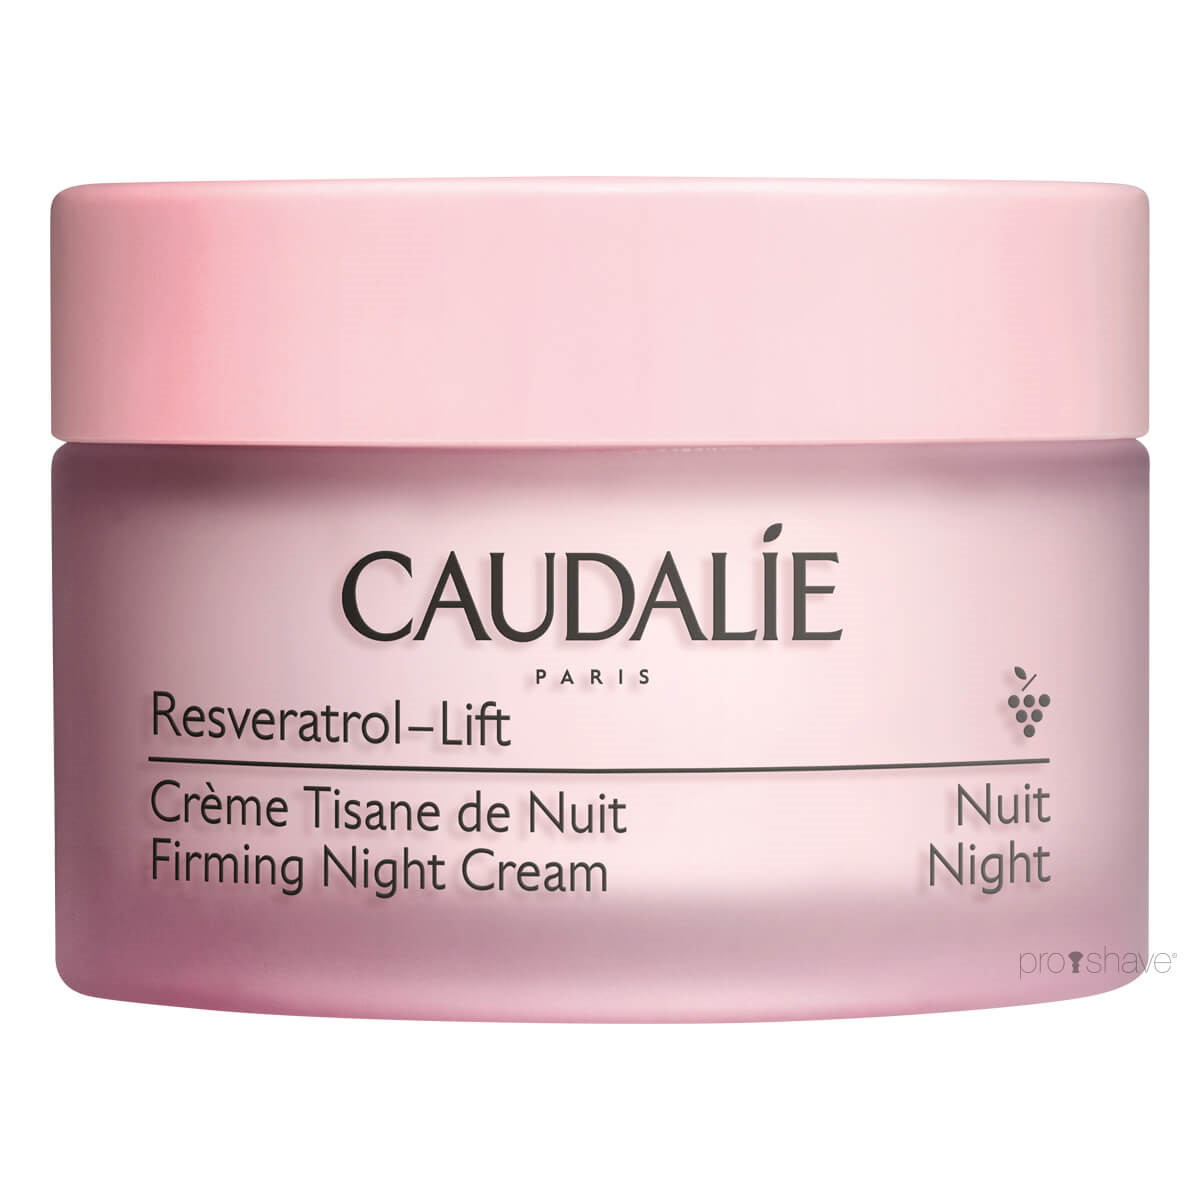 11: Caudalie Resveratrol Lift, Firming Night Cream, 50 ml.